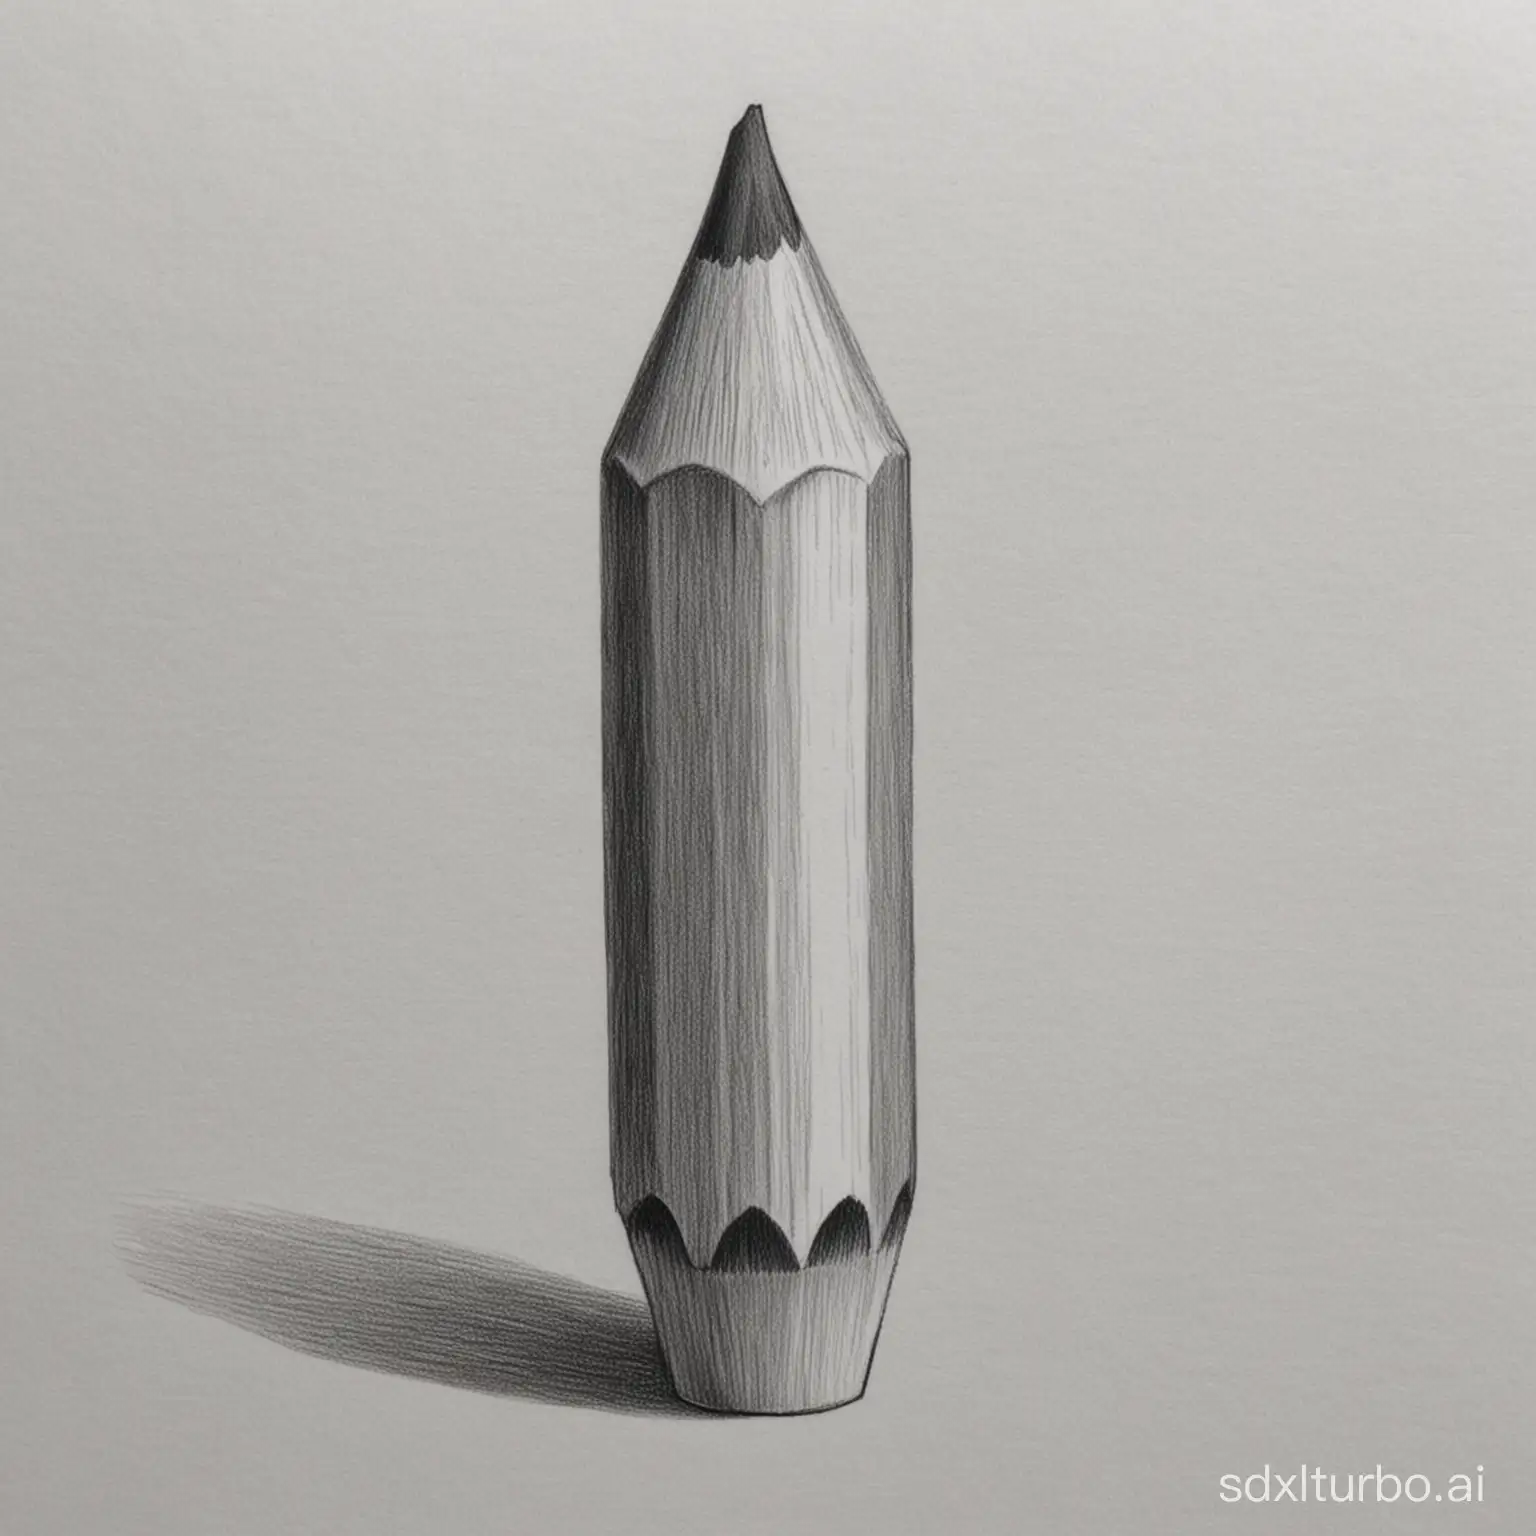 Expressive-Pencil-Sketch-Dynamic-Artistry-in-Monochrome